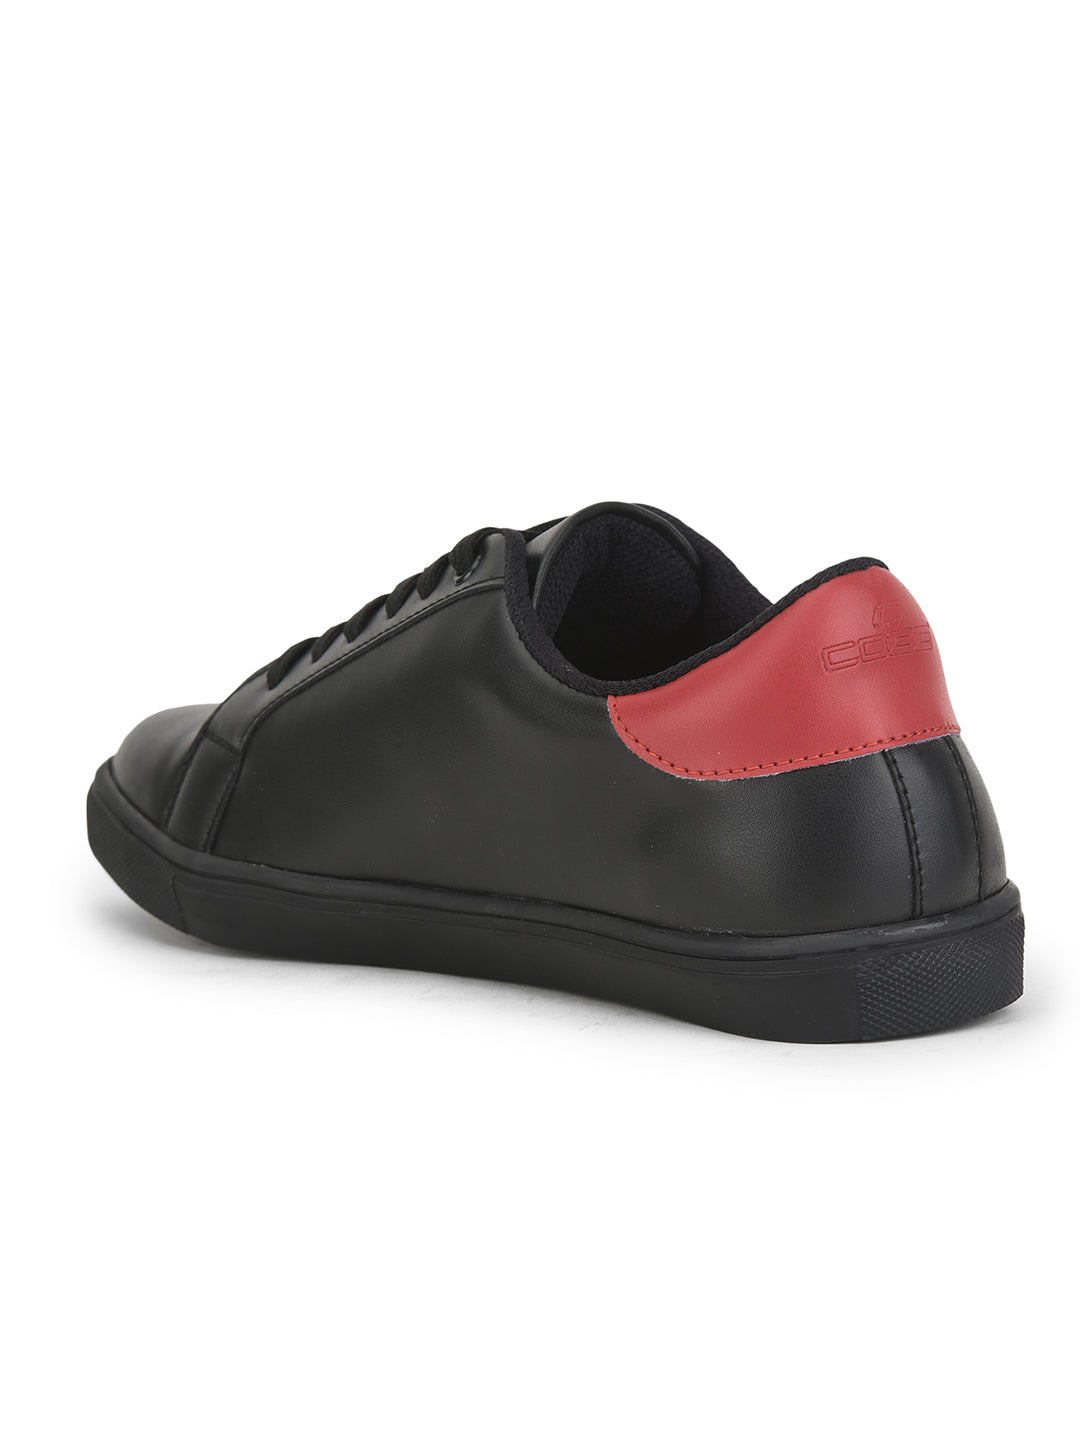 Cobb Mens Black Sneakers Shoes